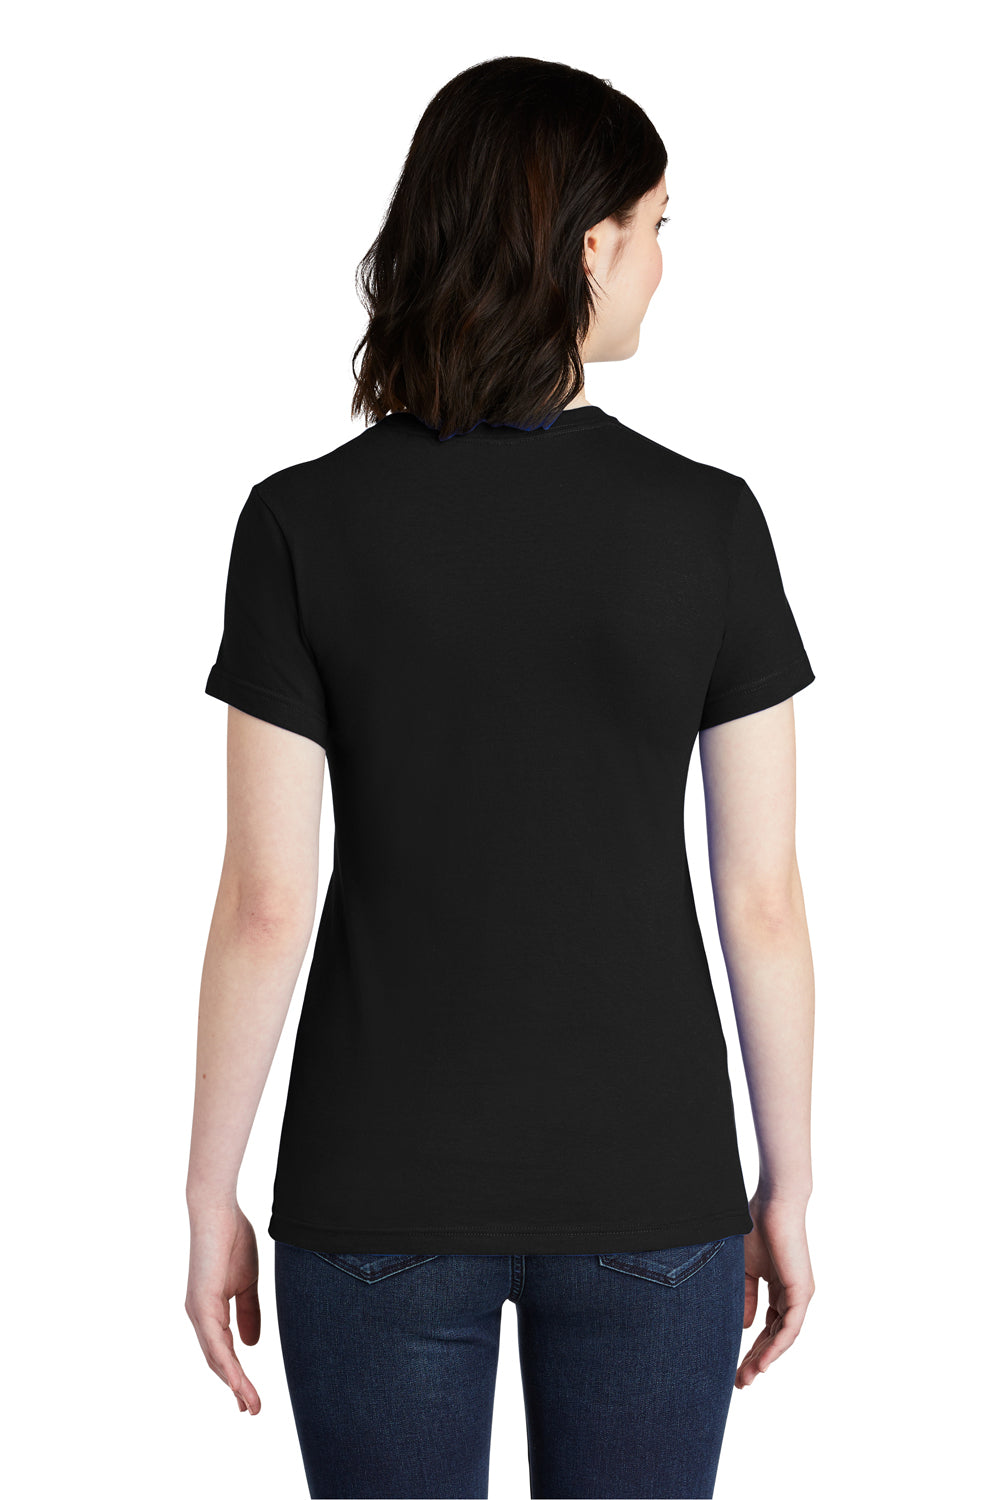 American Apparel 2102W Womens Fine Jersey Short Sleeve Crewneck T-Shirt Black Back